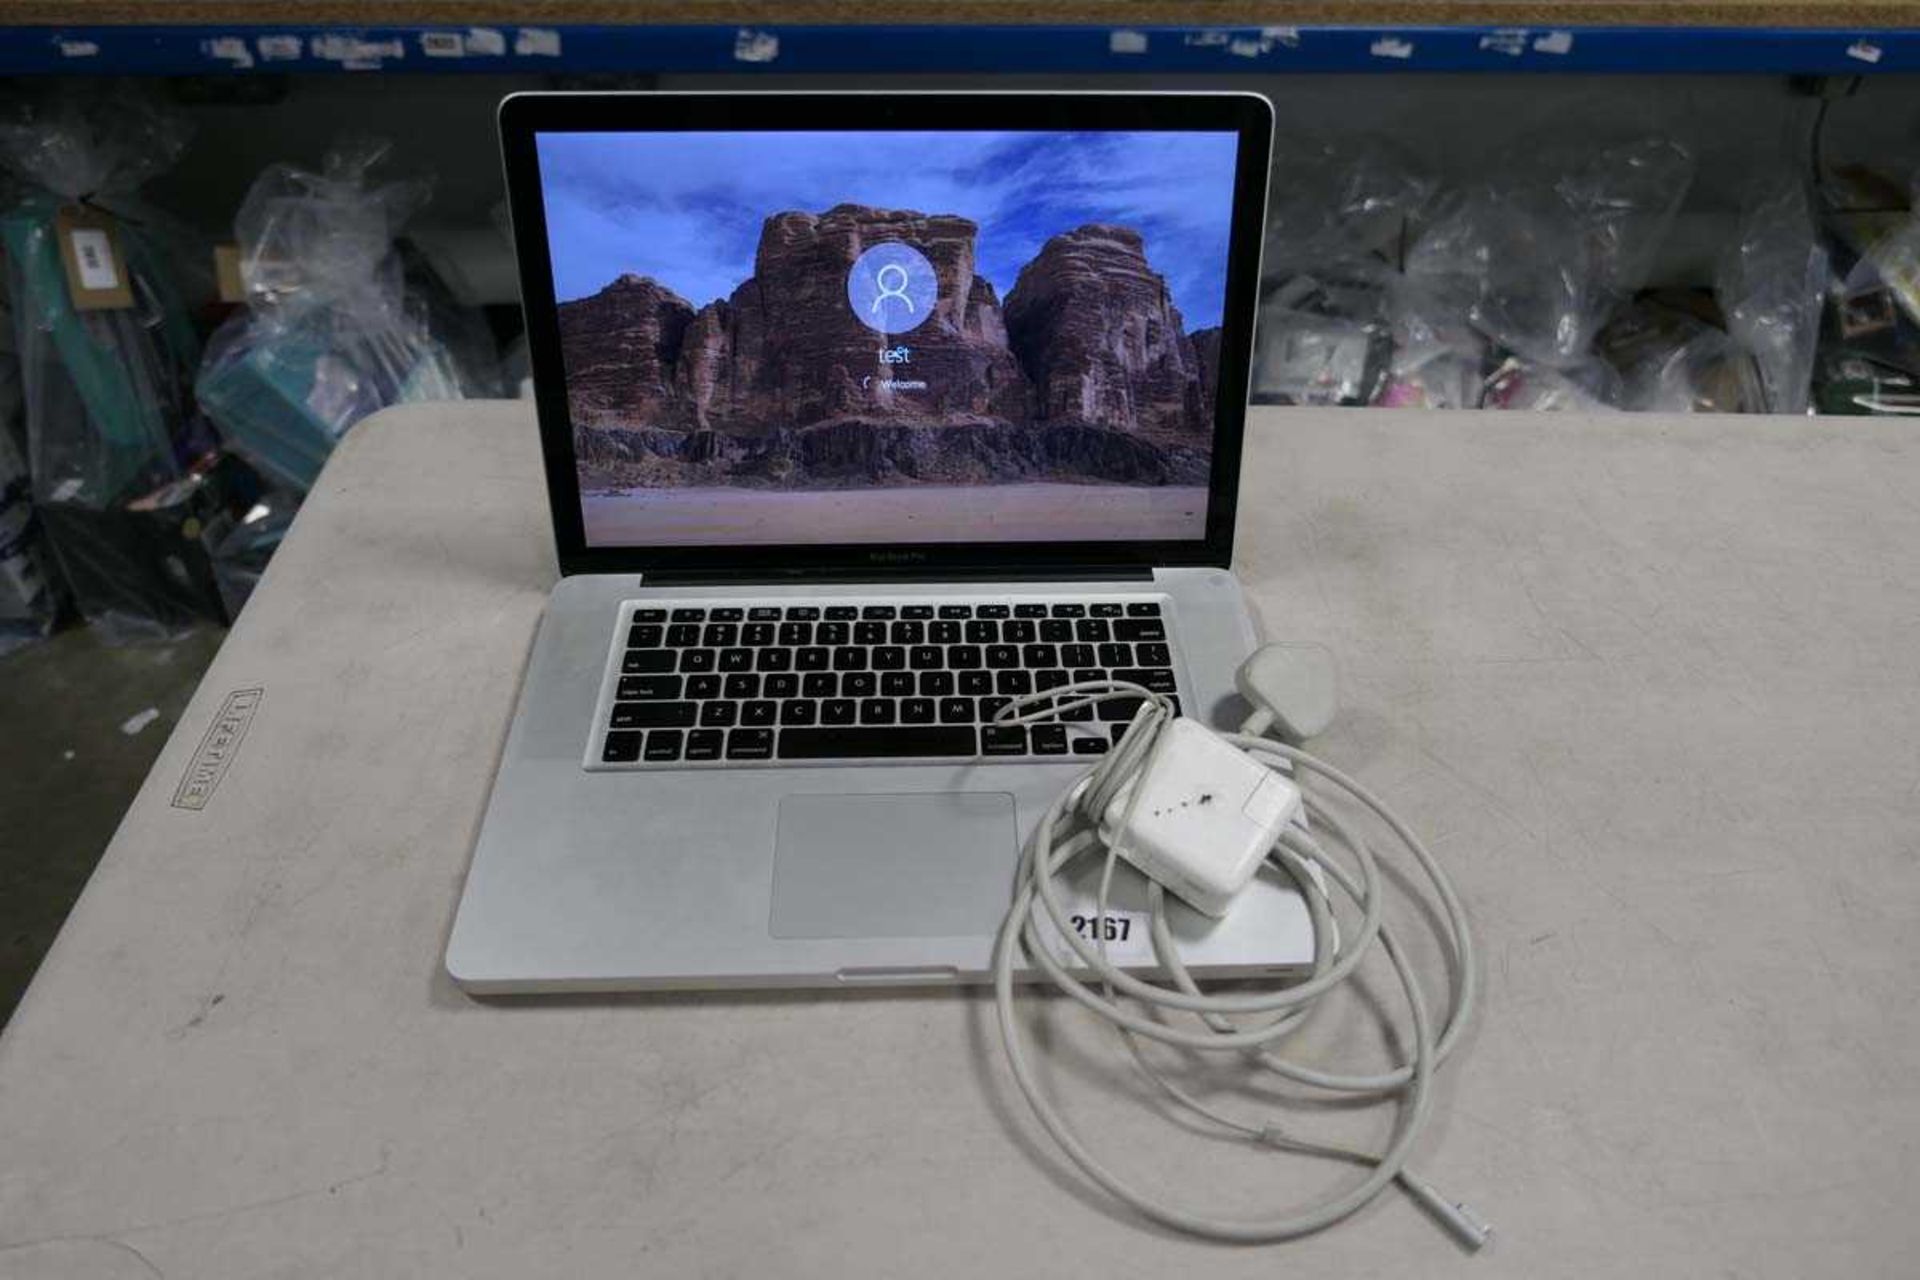 Apple Macbook Pro model A1286 running Windows 10 with psu